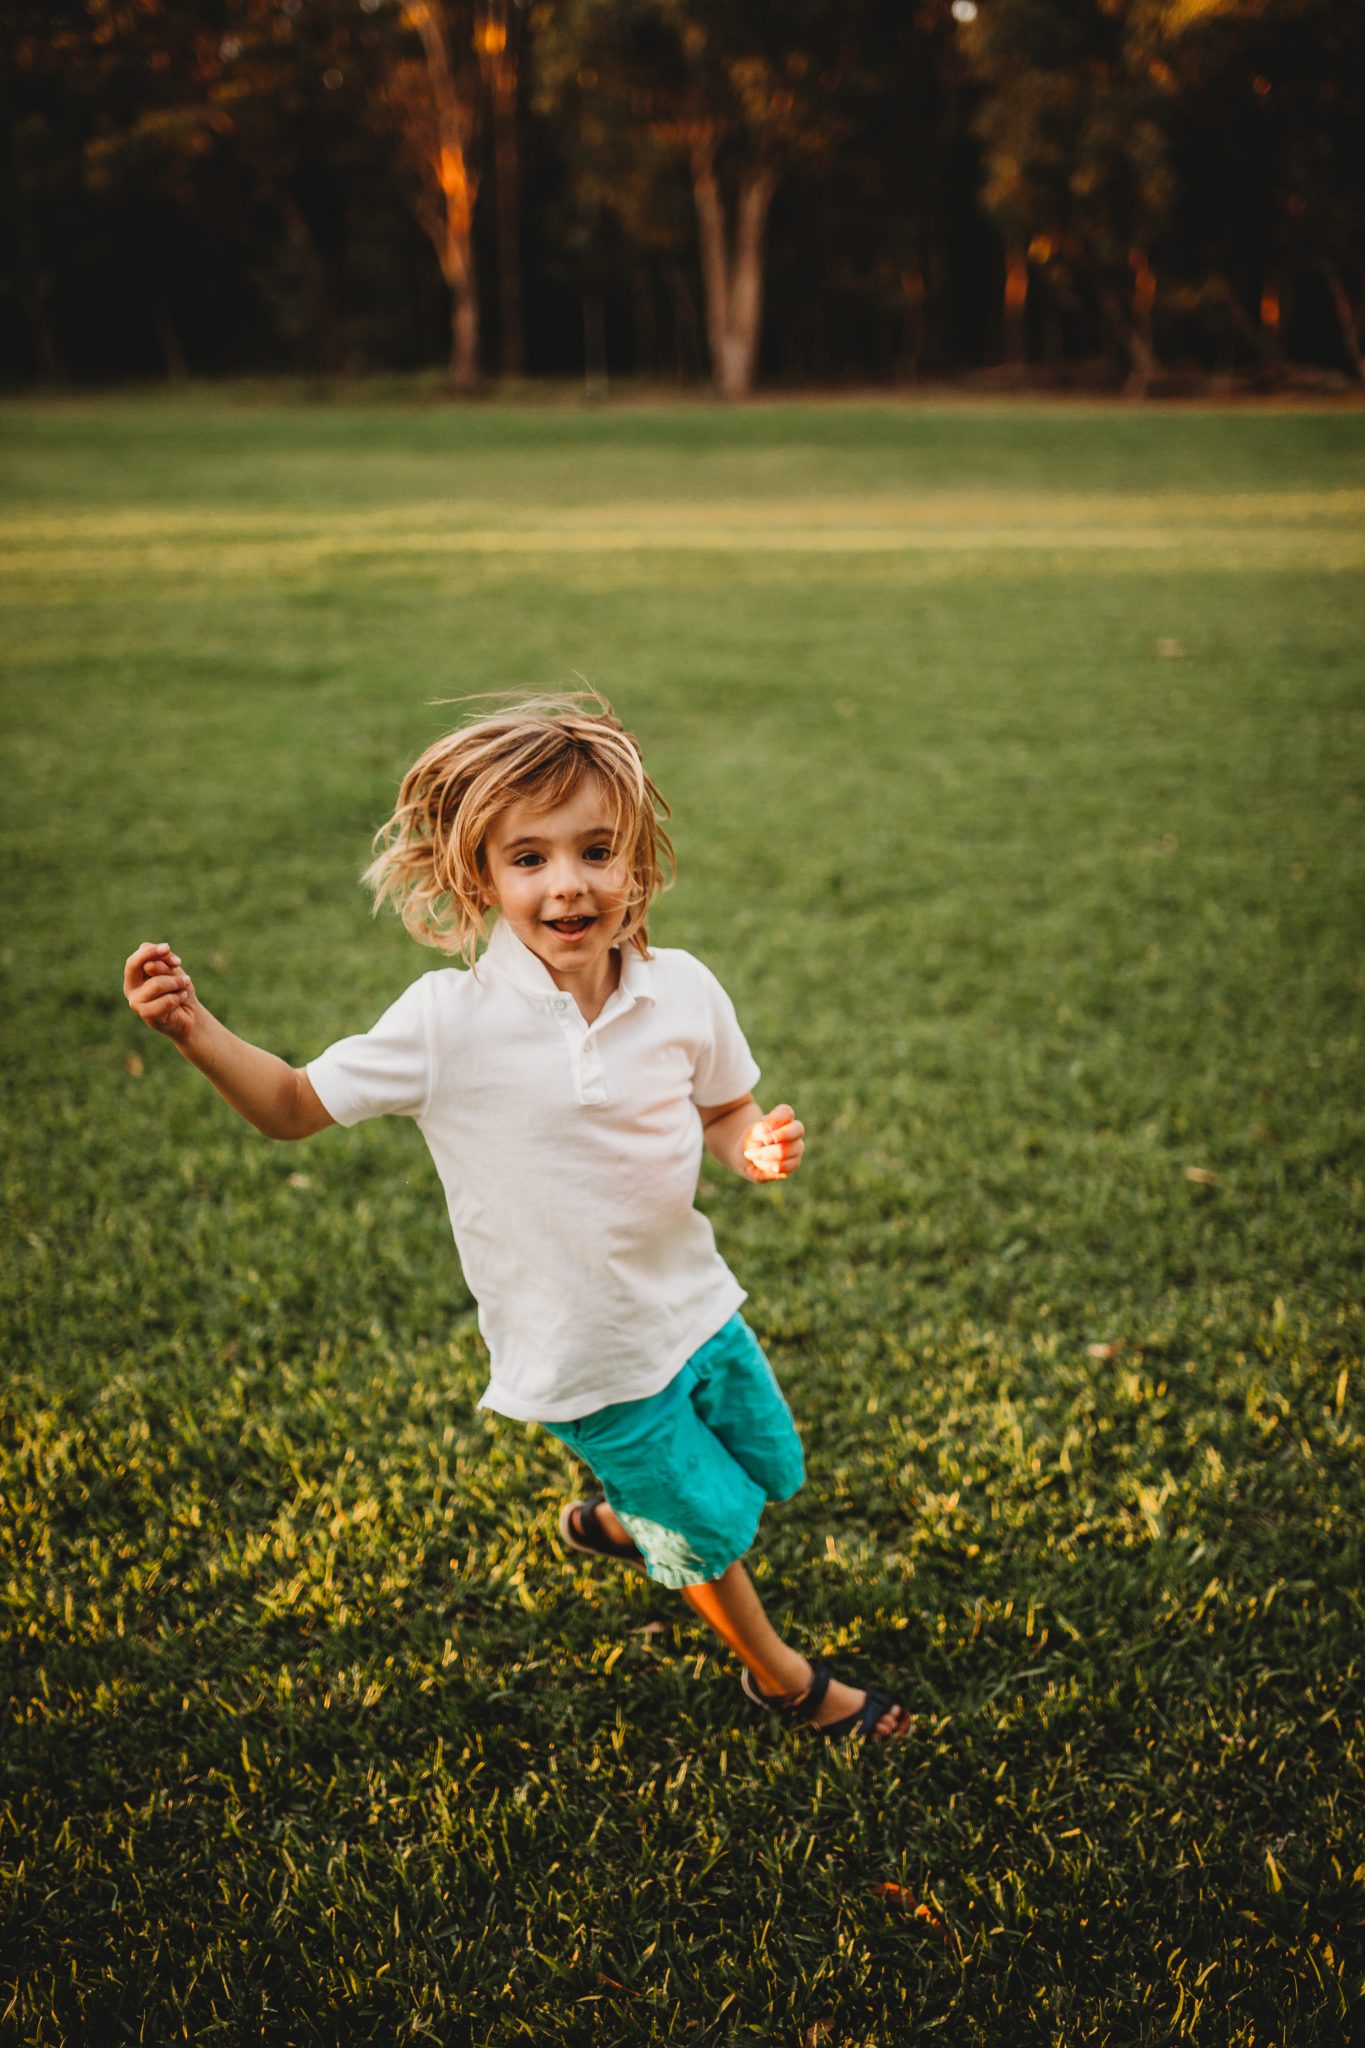 Action shot of young boy running while looking at camera